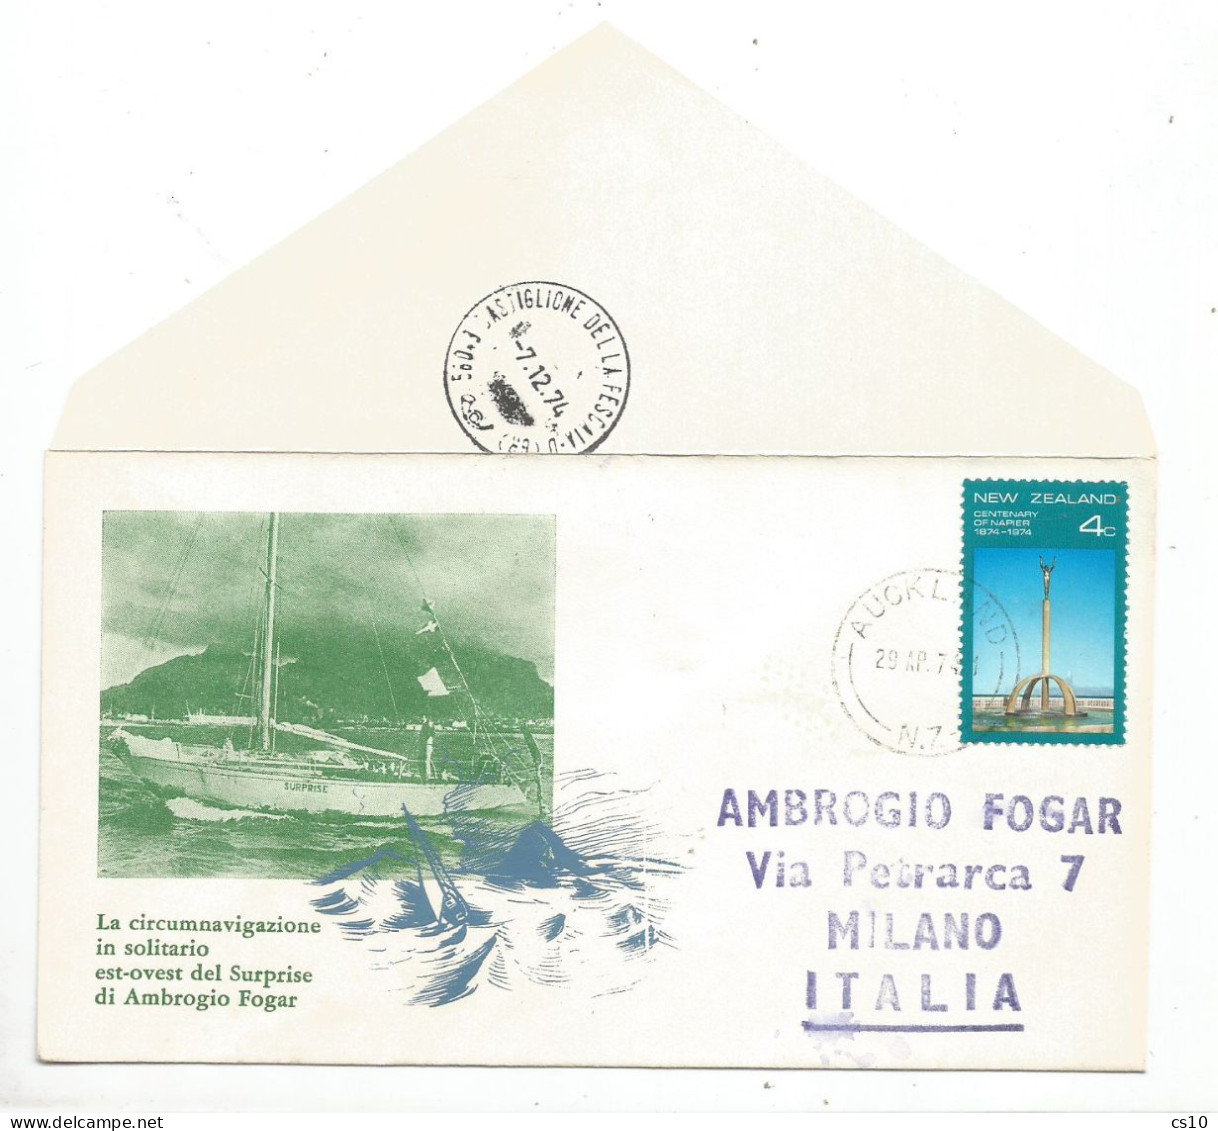 Vela Sailing SOLO Circumnavigation - Ambrogio Fogar On Surprise Yacht - Official CV Auckland 29apr1974 X Italy 7dec74 - Vela